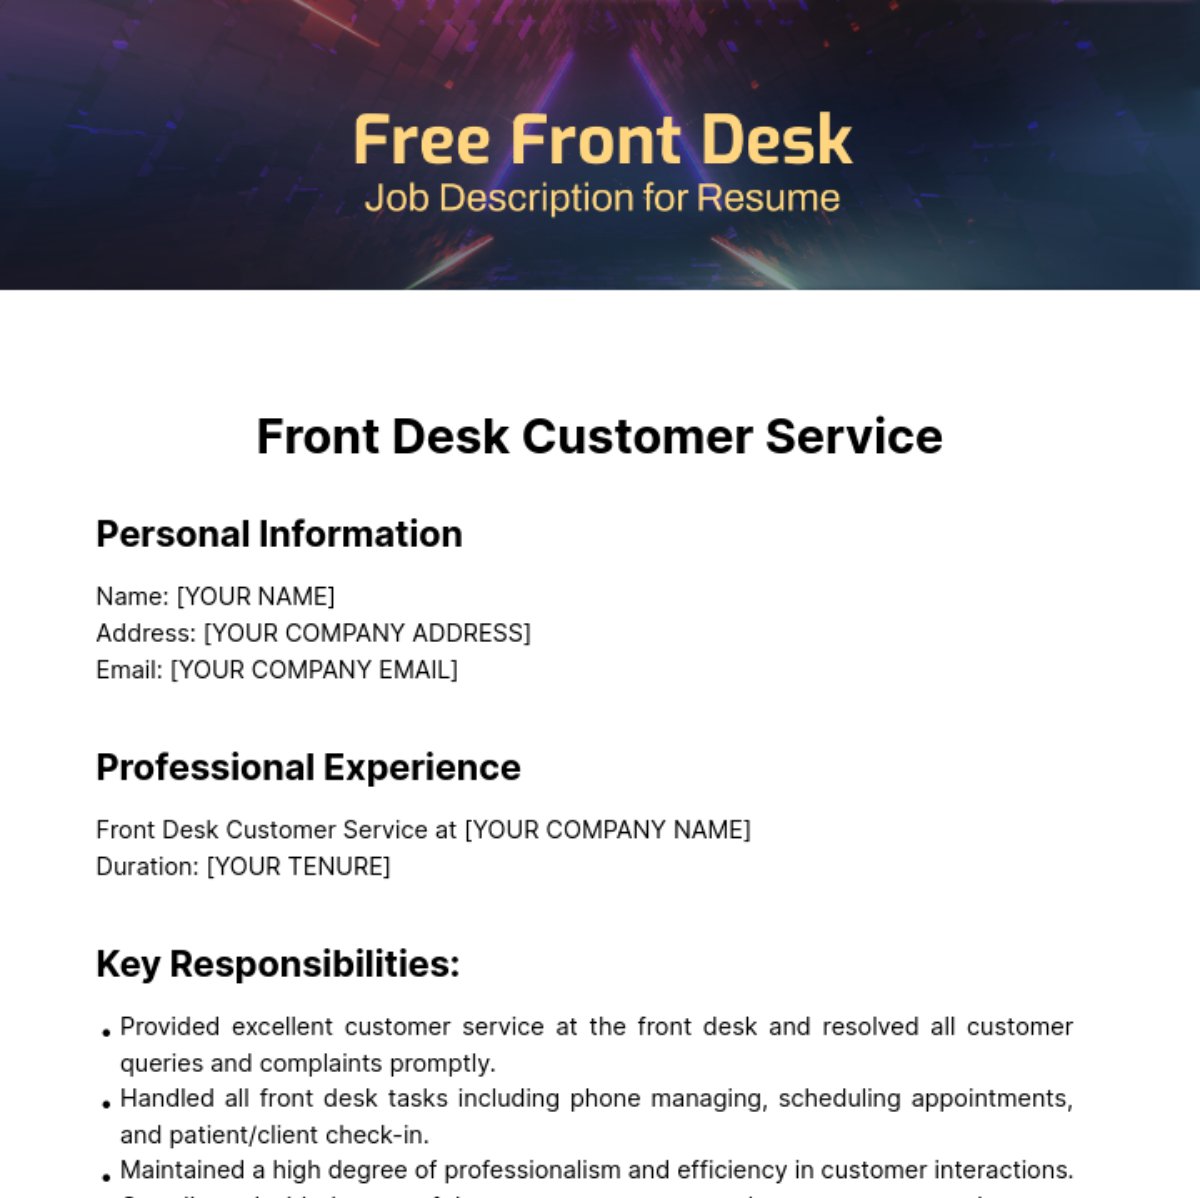 Free Front Desk Job Description for Resume Template